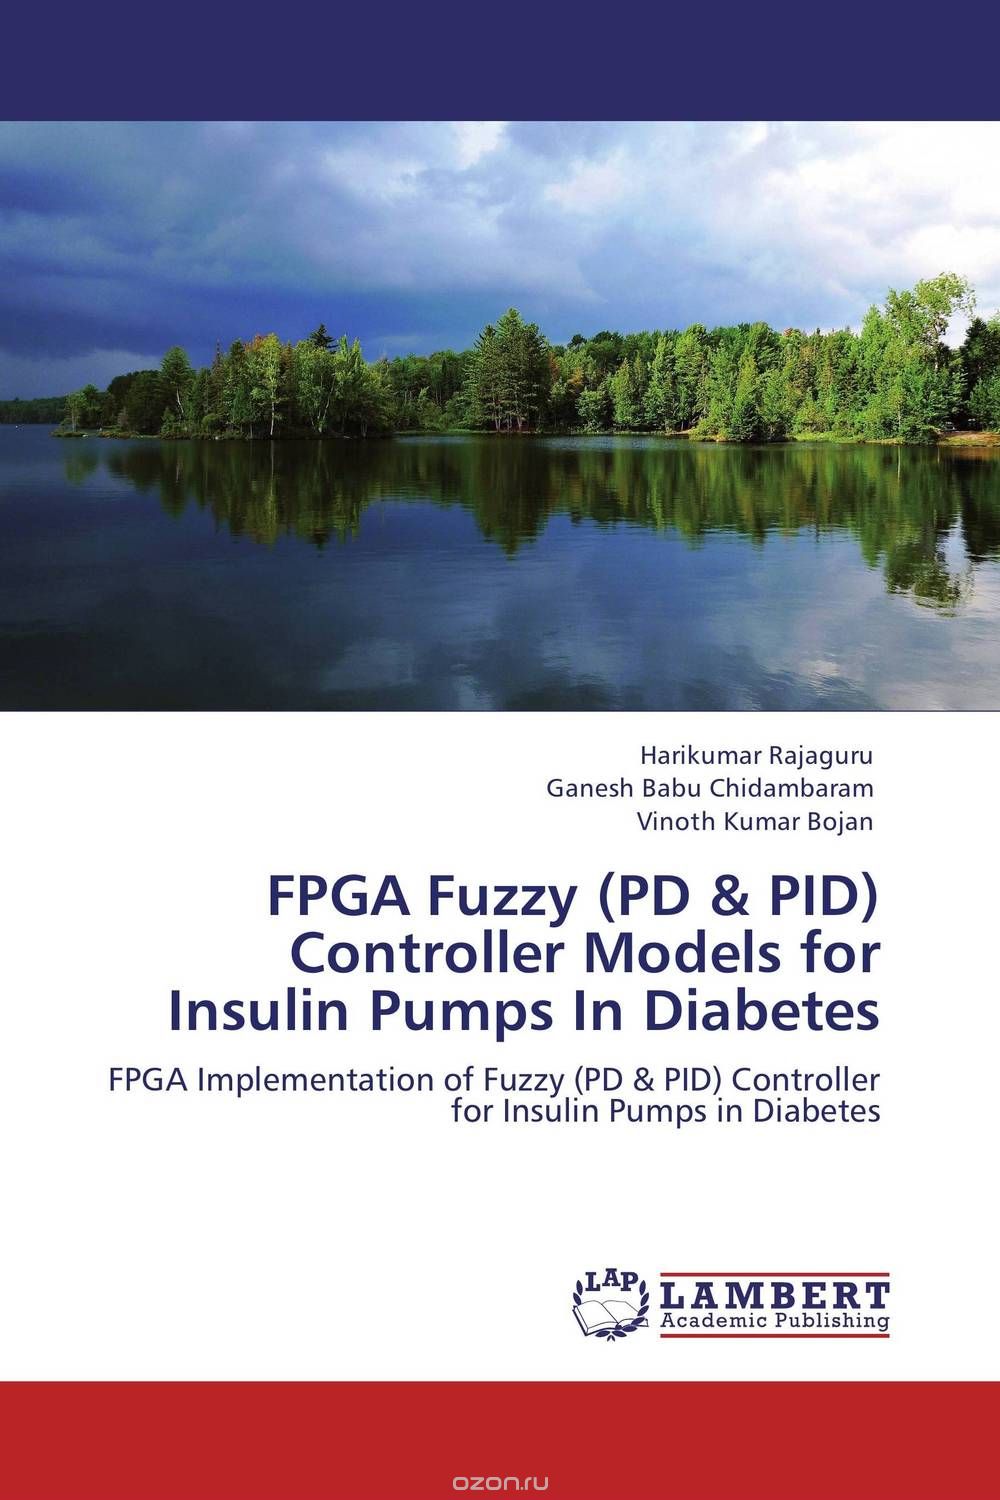 Скачать книгу "FPGA Fuzzy (PD & PID) Controller Models for Insulin Pumps In Diabetes"